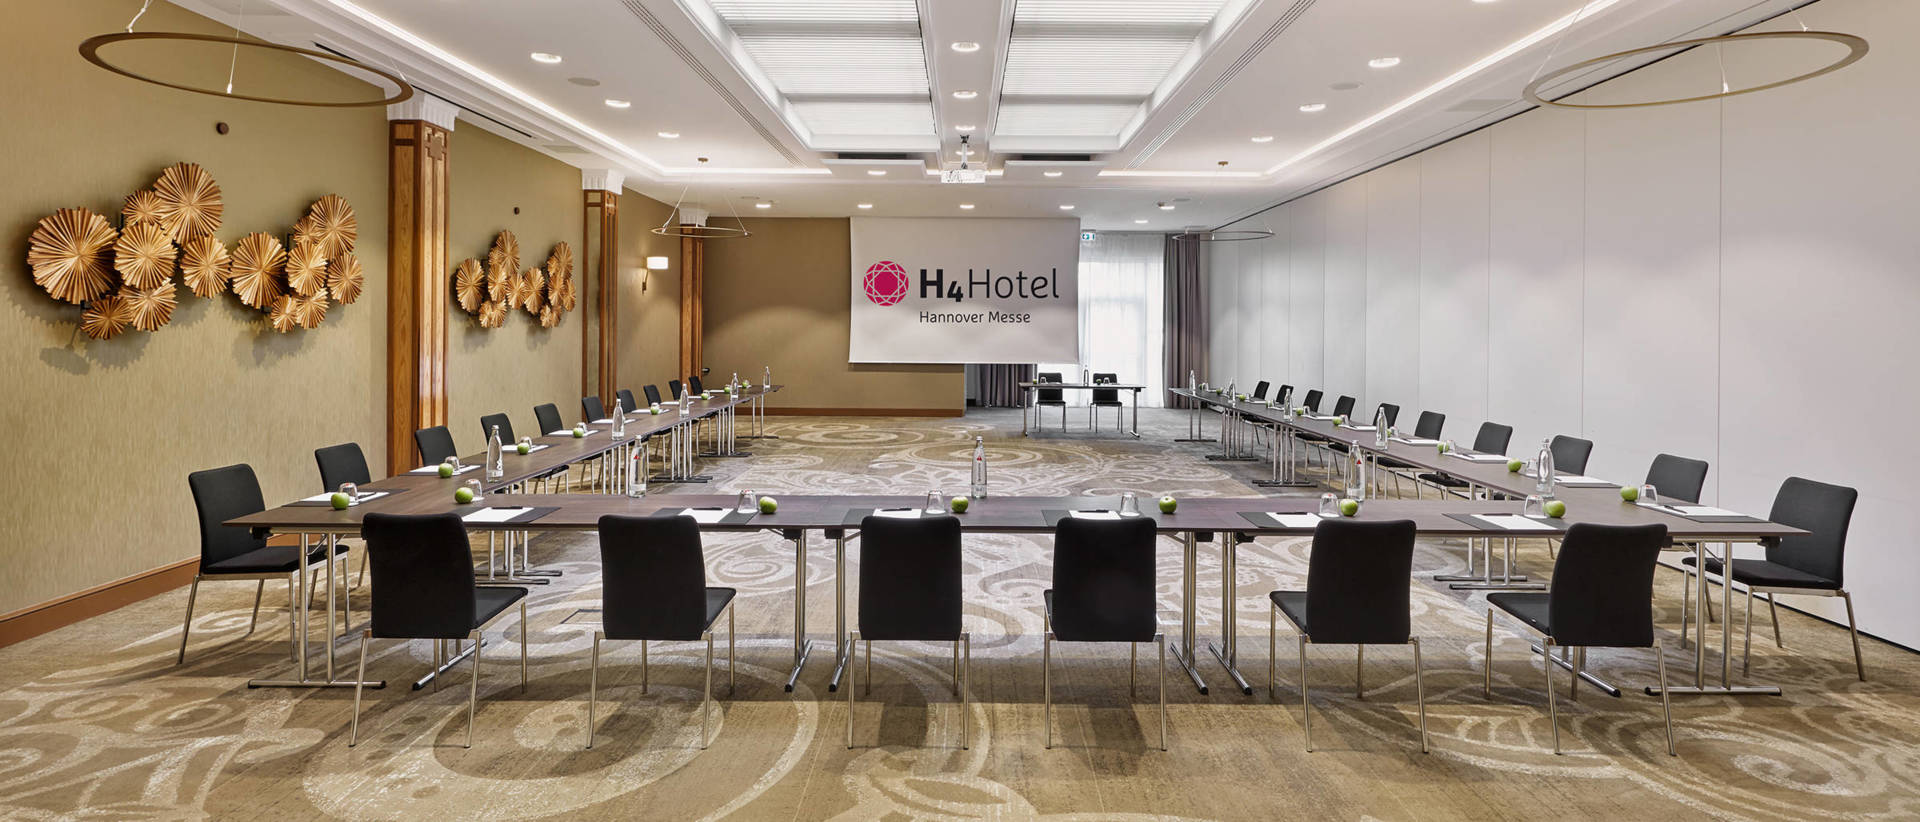 Business hotel H4 Hotel Hannover Messe - Official website